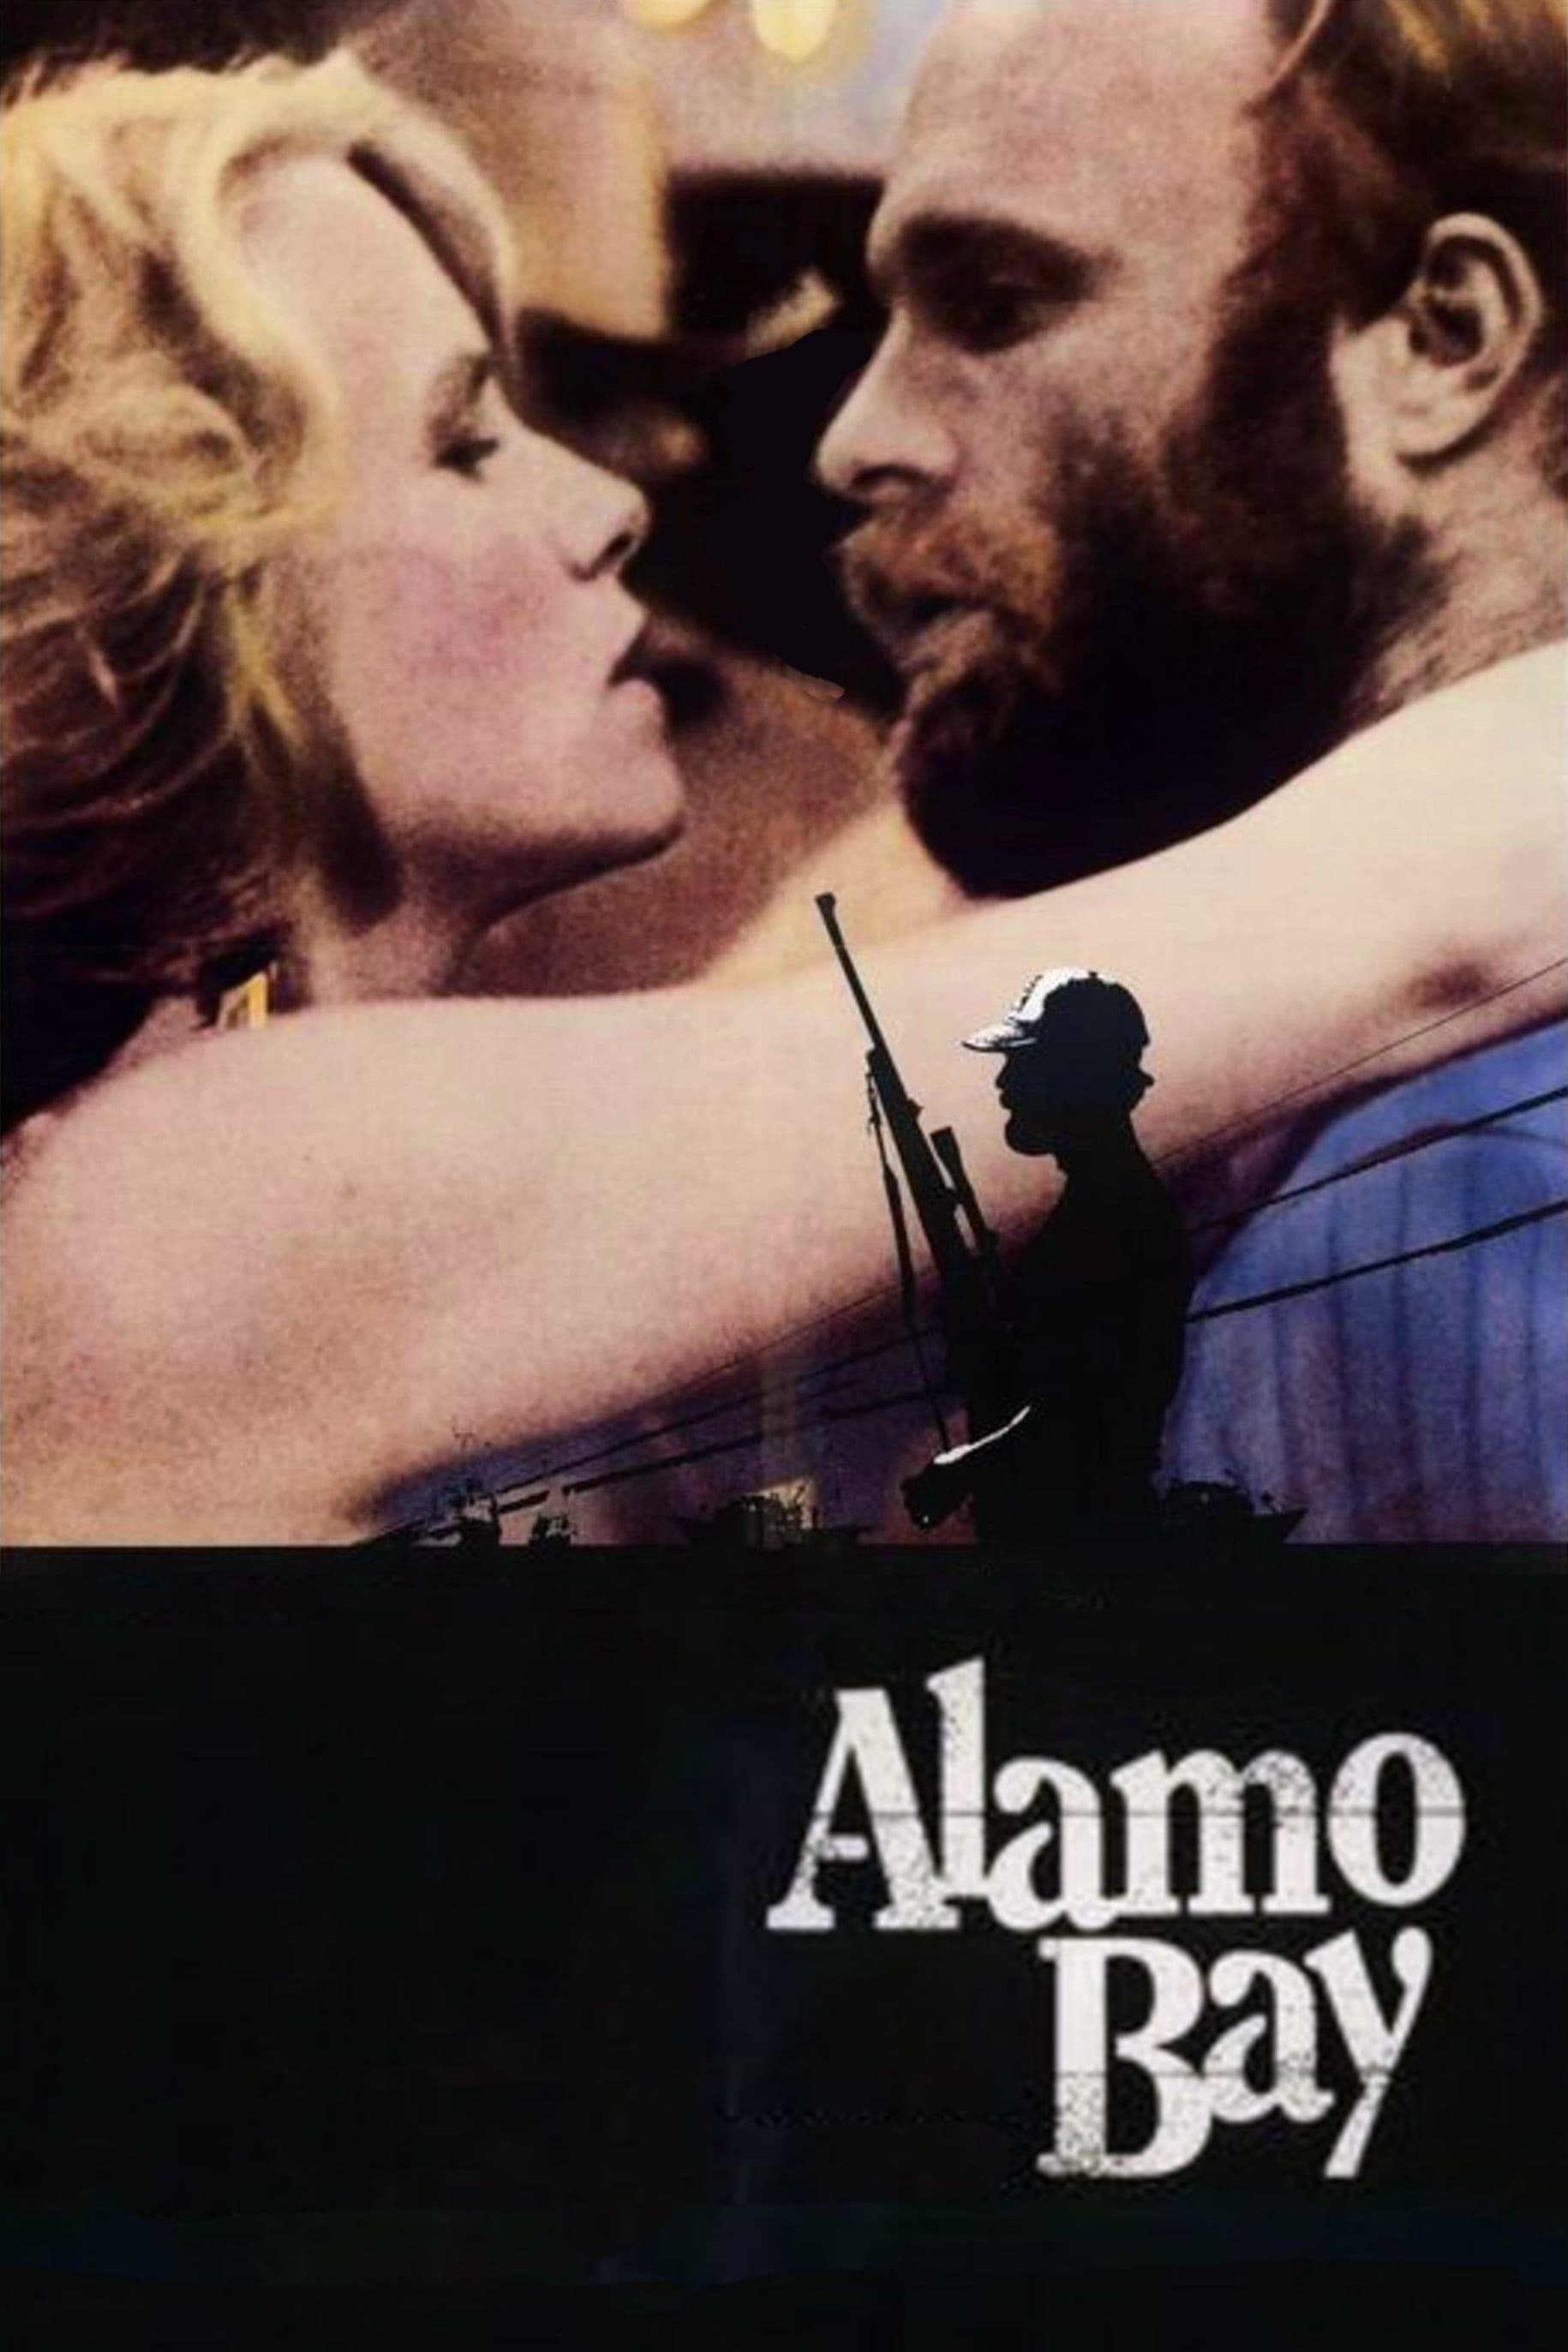 Alamo Bay film